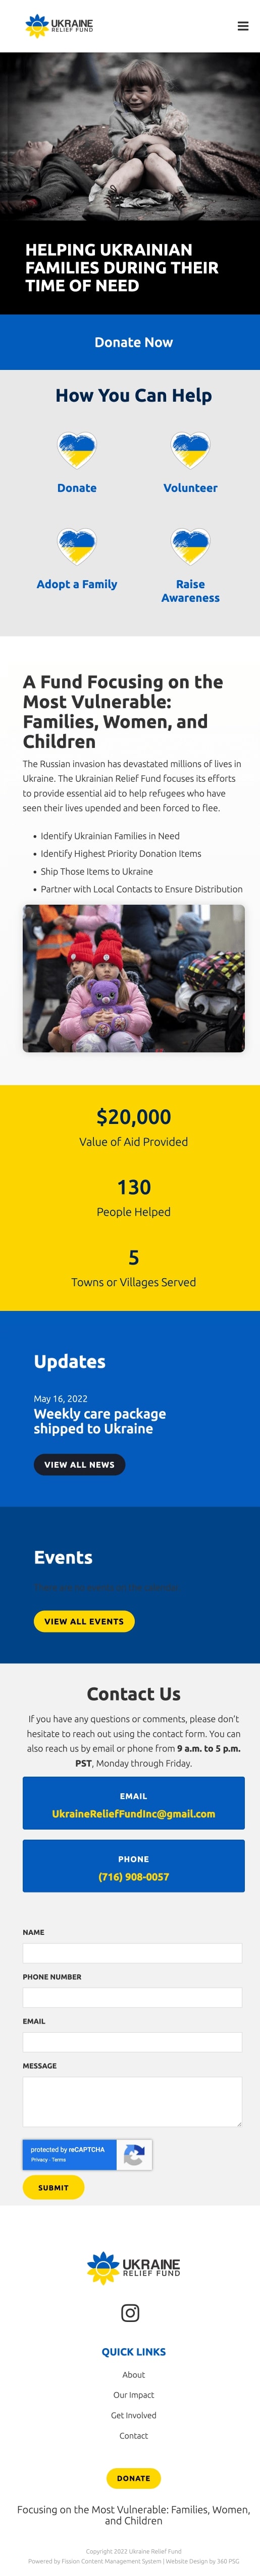 Ukraine Relief Fund Website - Mobile